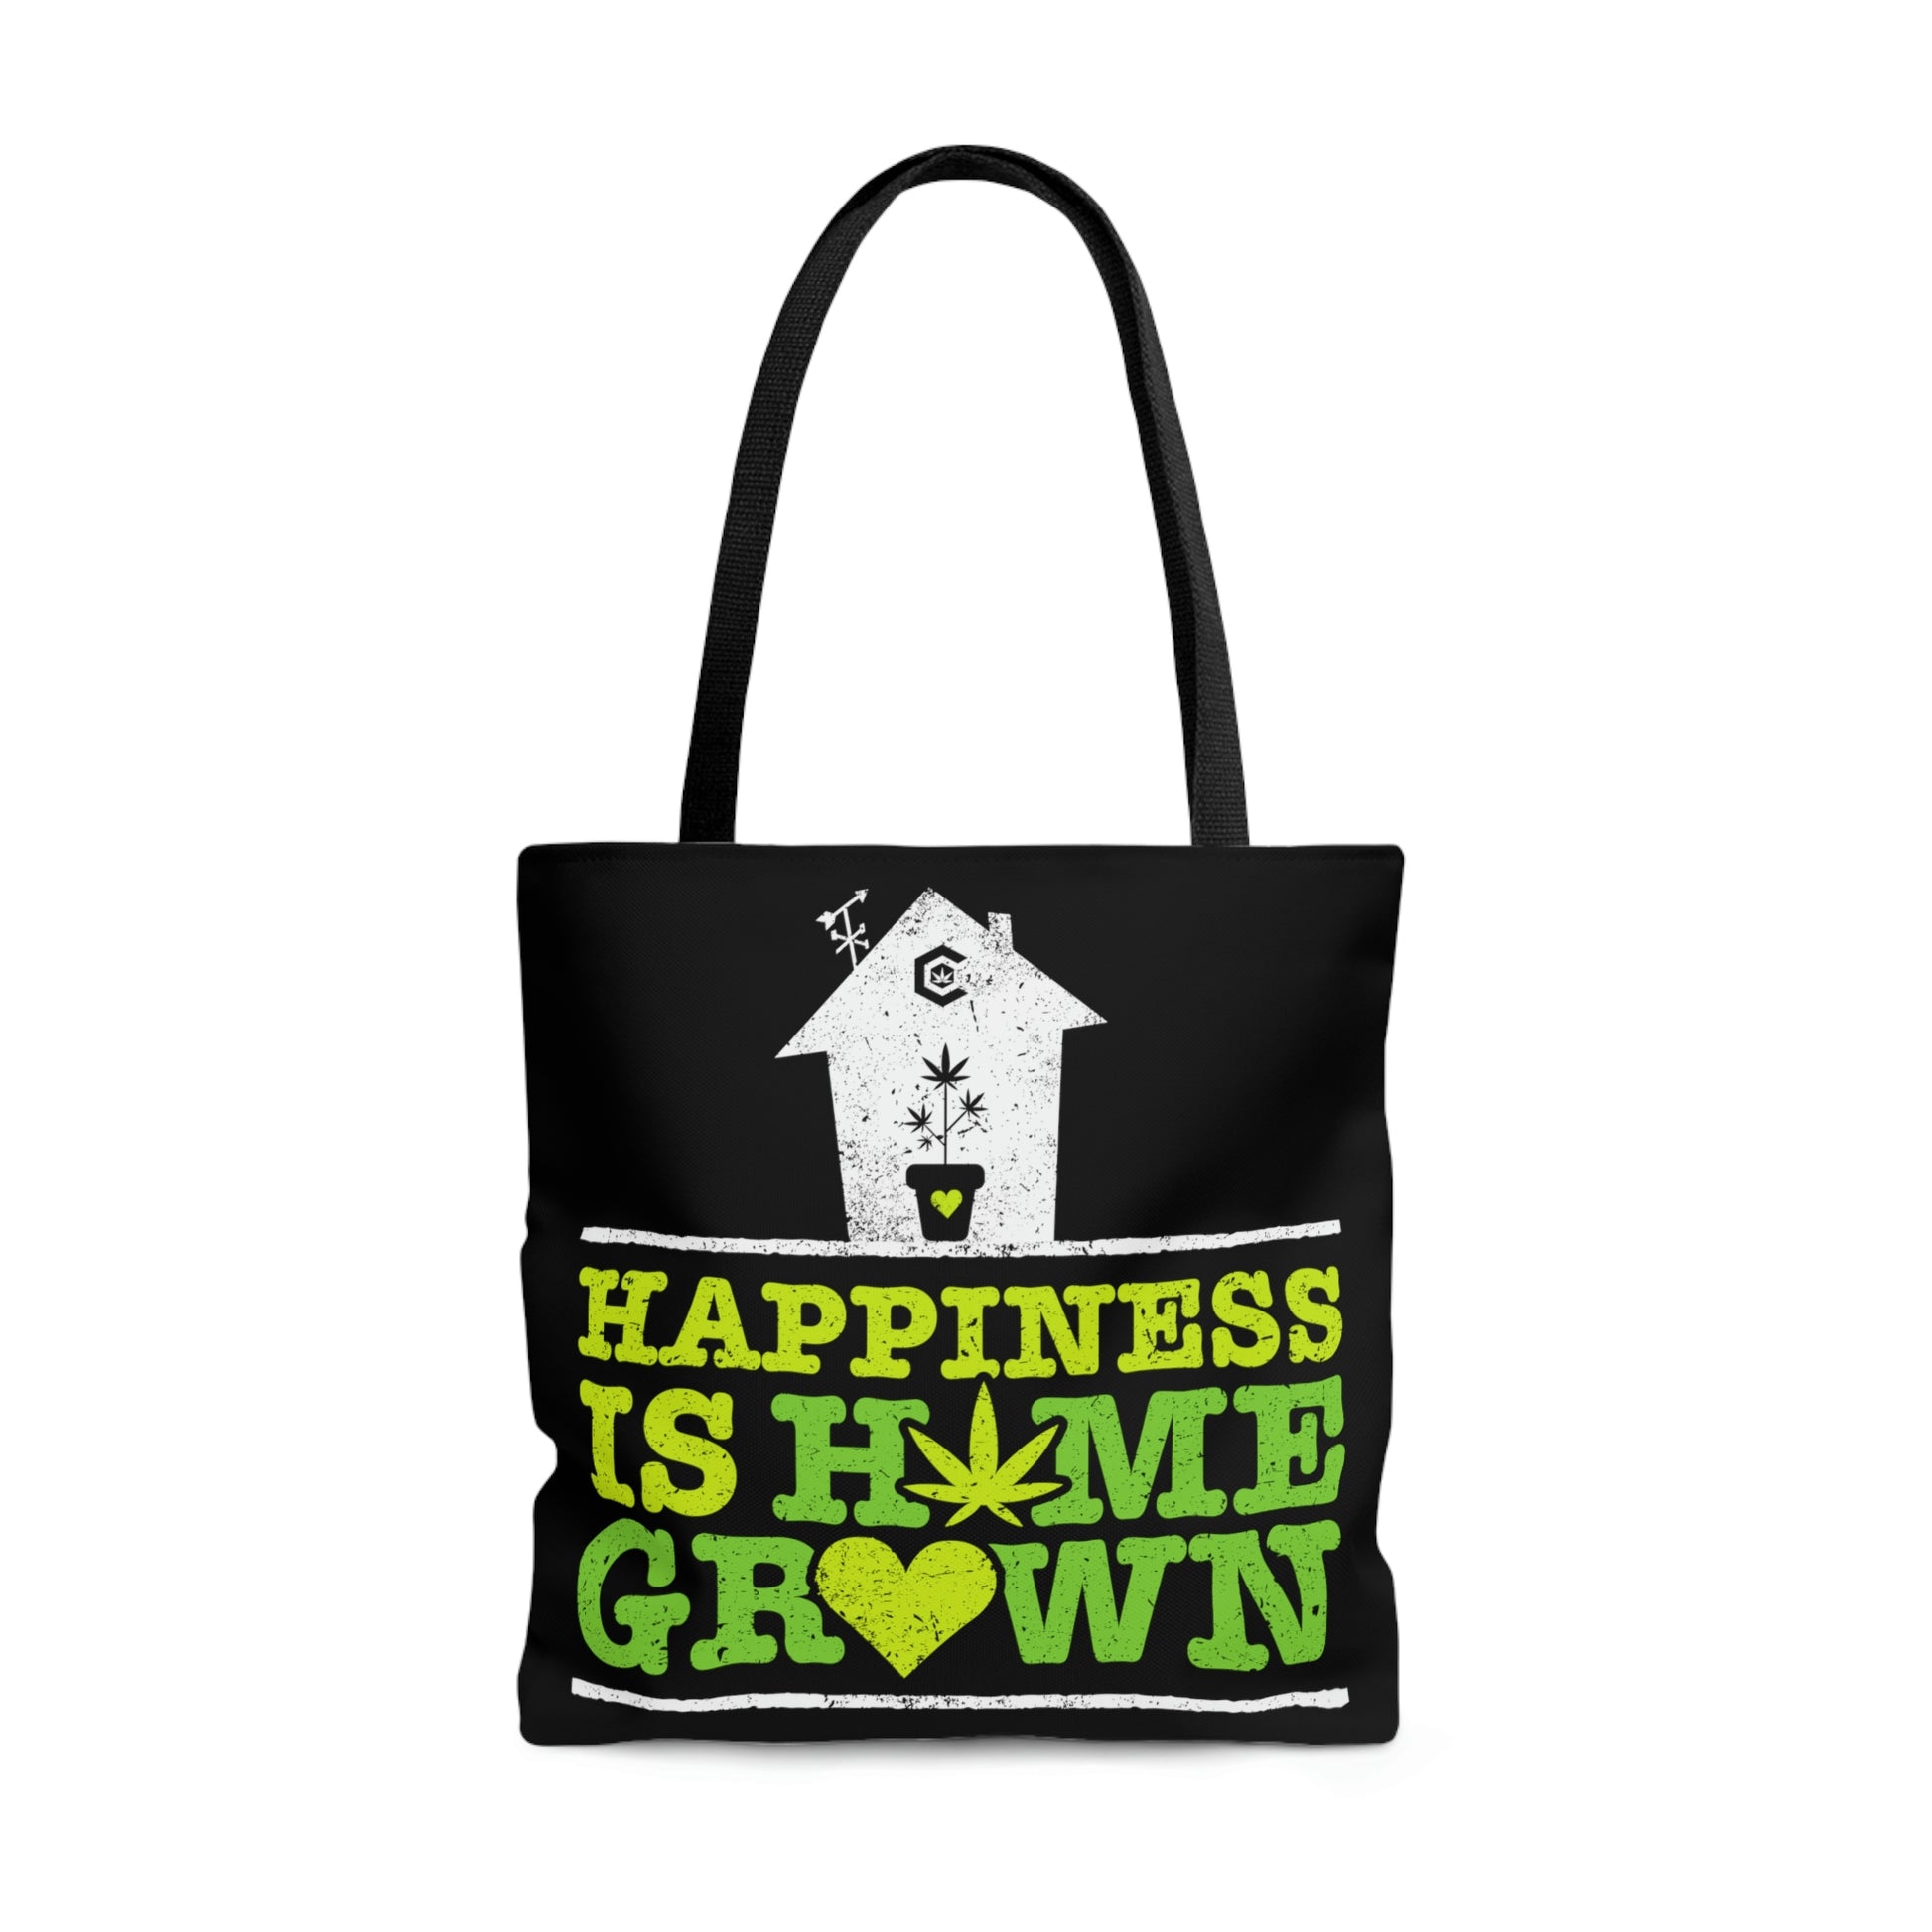 Terrific graphics engulf the Happiness Is Homegrown Black Marijuana Tote Bag